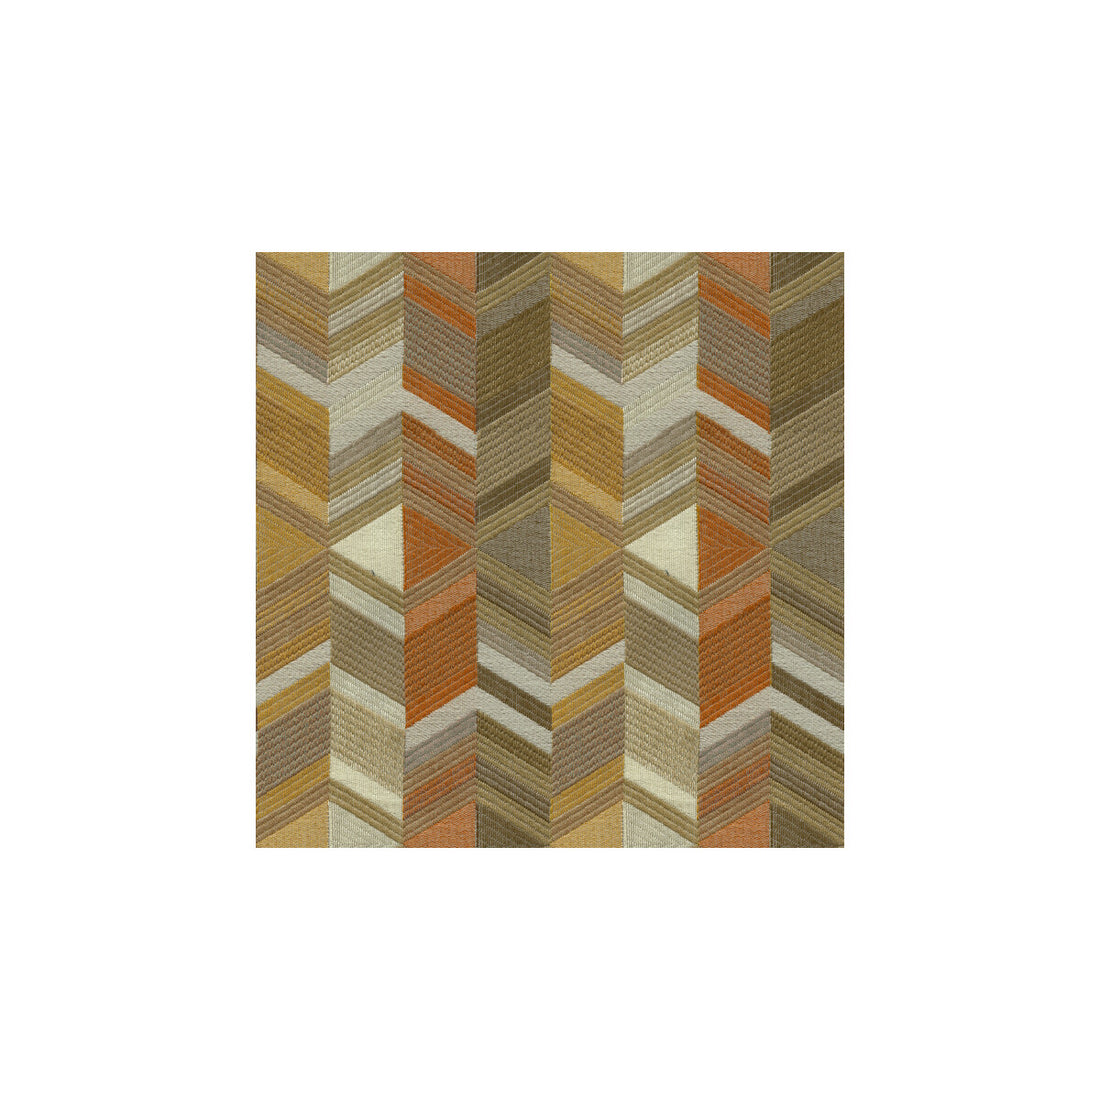 Kravet Design fabric in 32534-412 color - pattern 32534.412.0 - by Kravet Design in the Gis collection